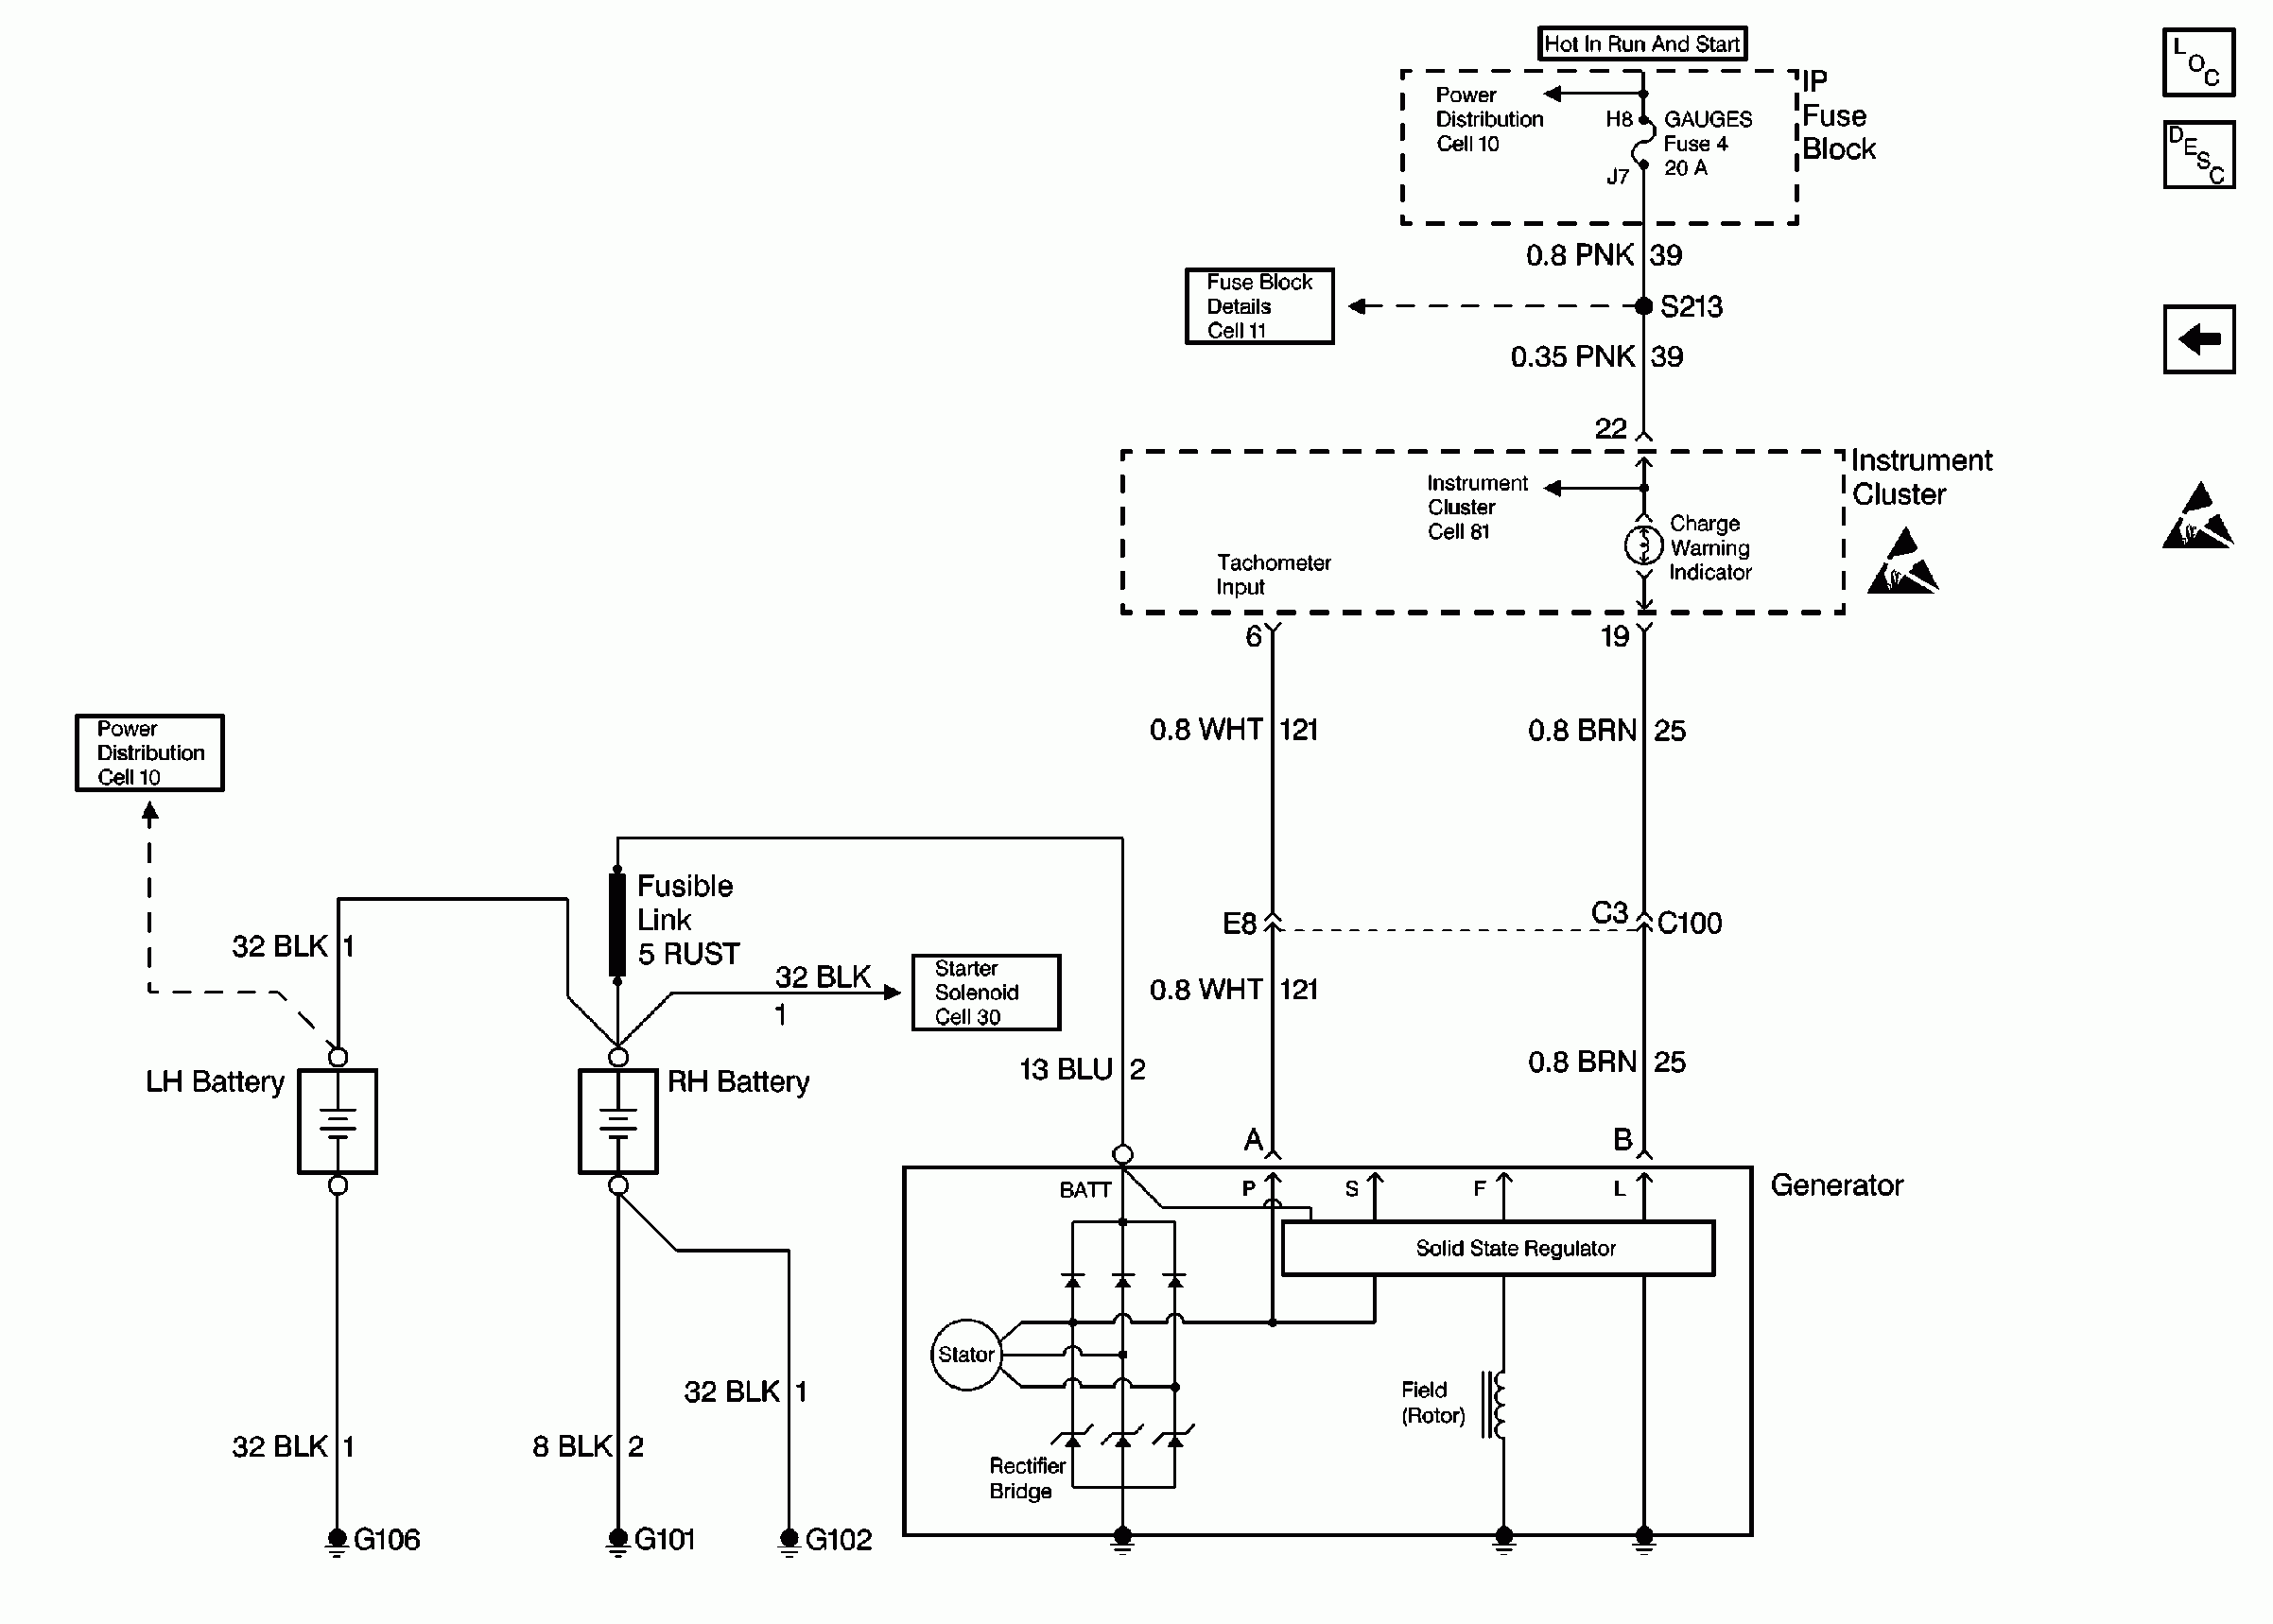 Wiring Diagram For Genset Cat Olympian D200p4 Model 2001